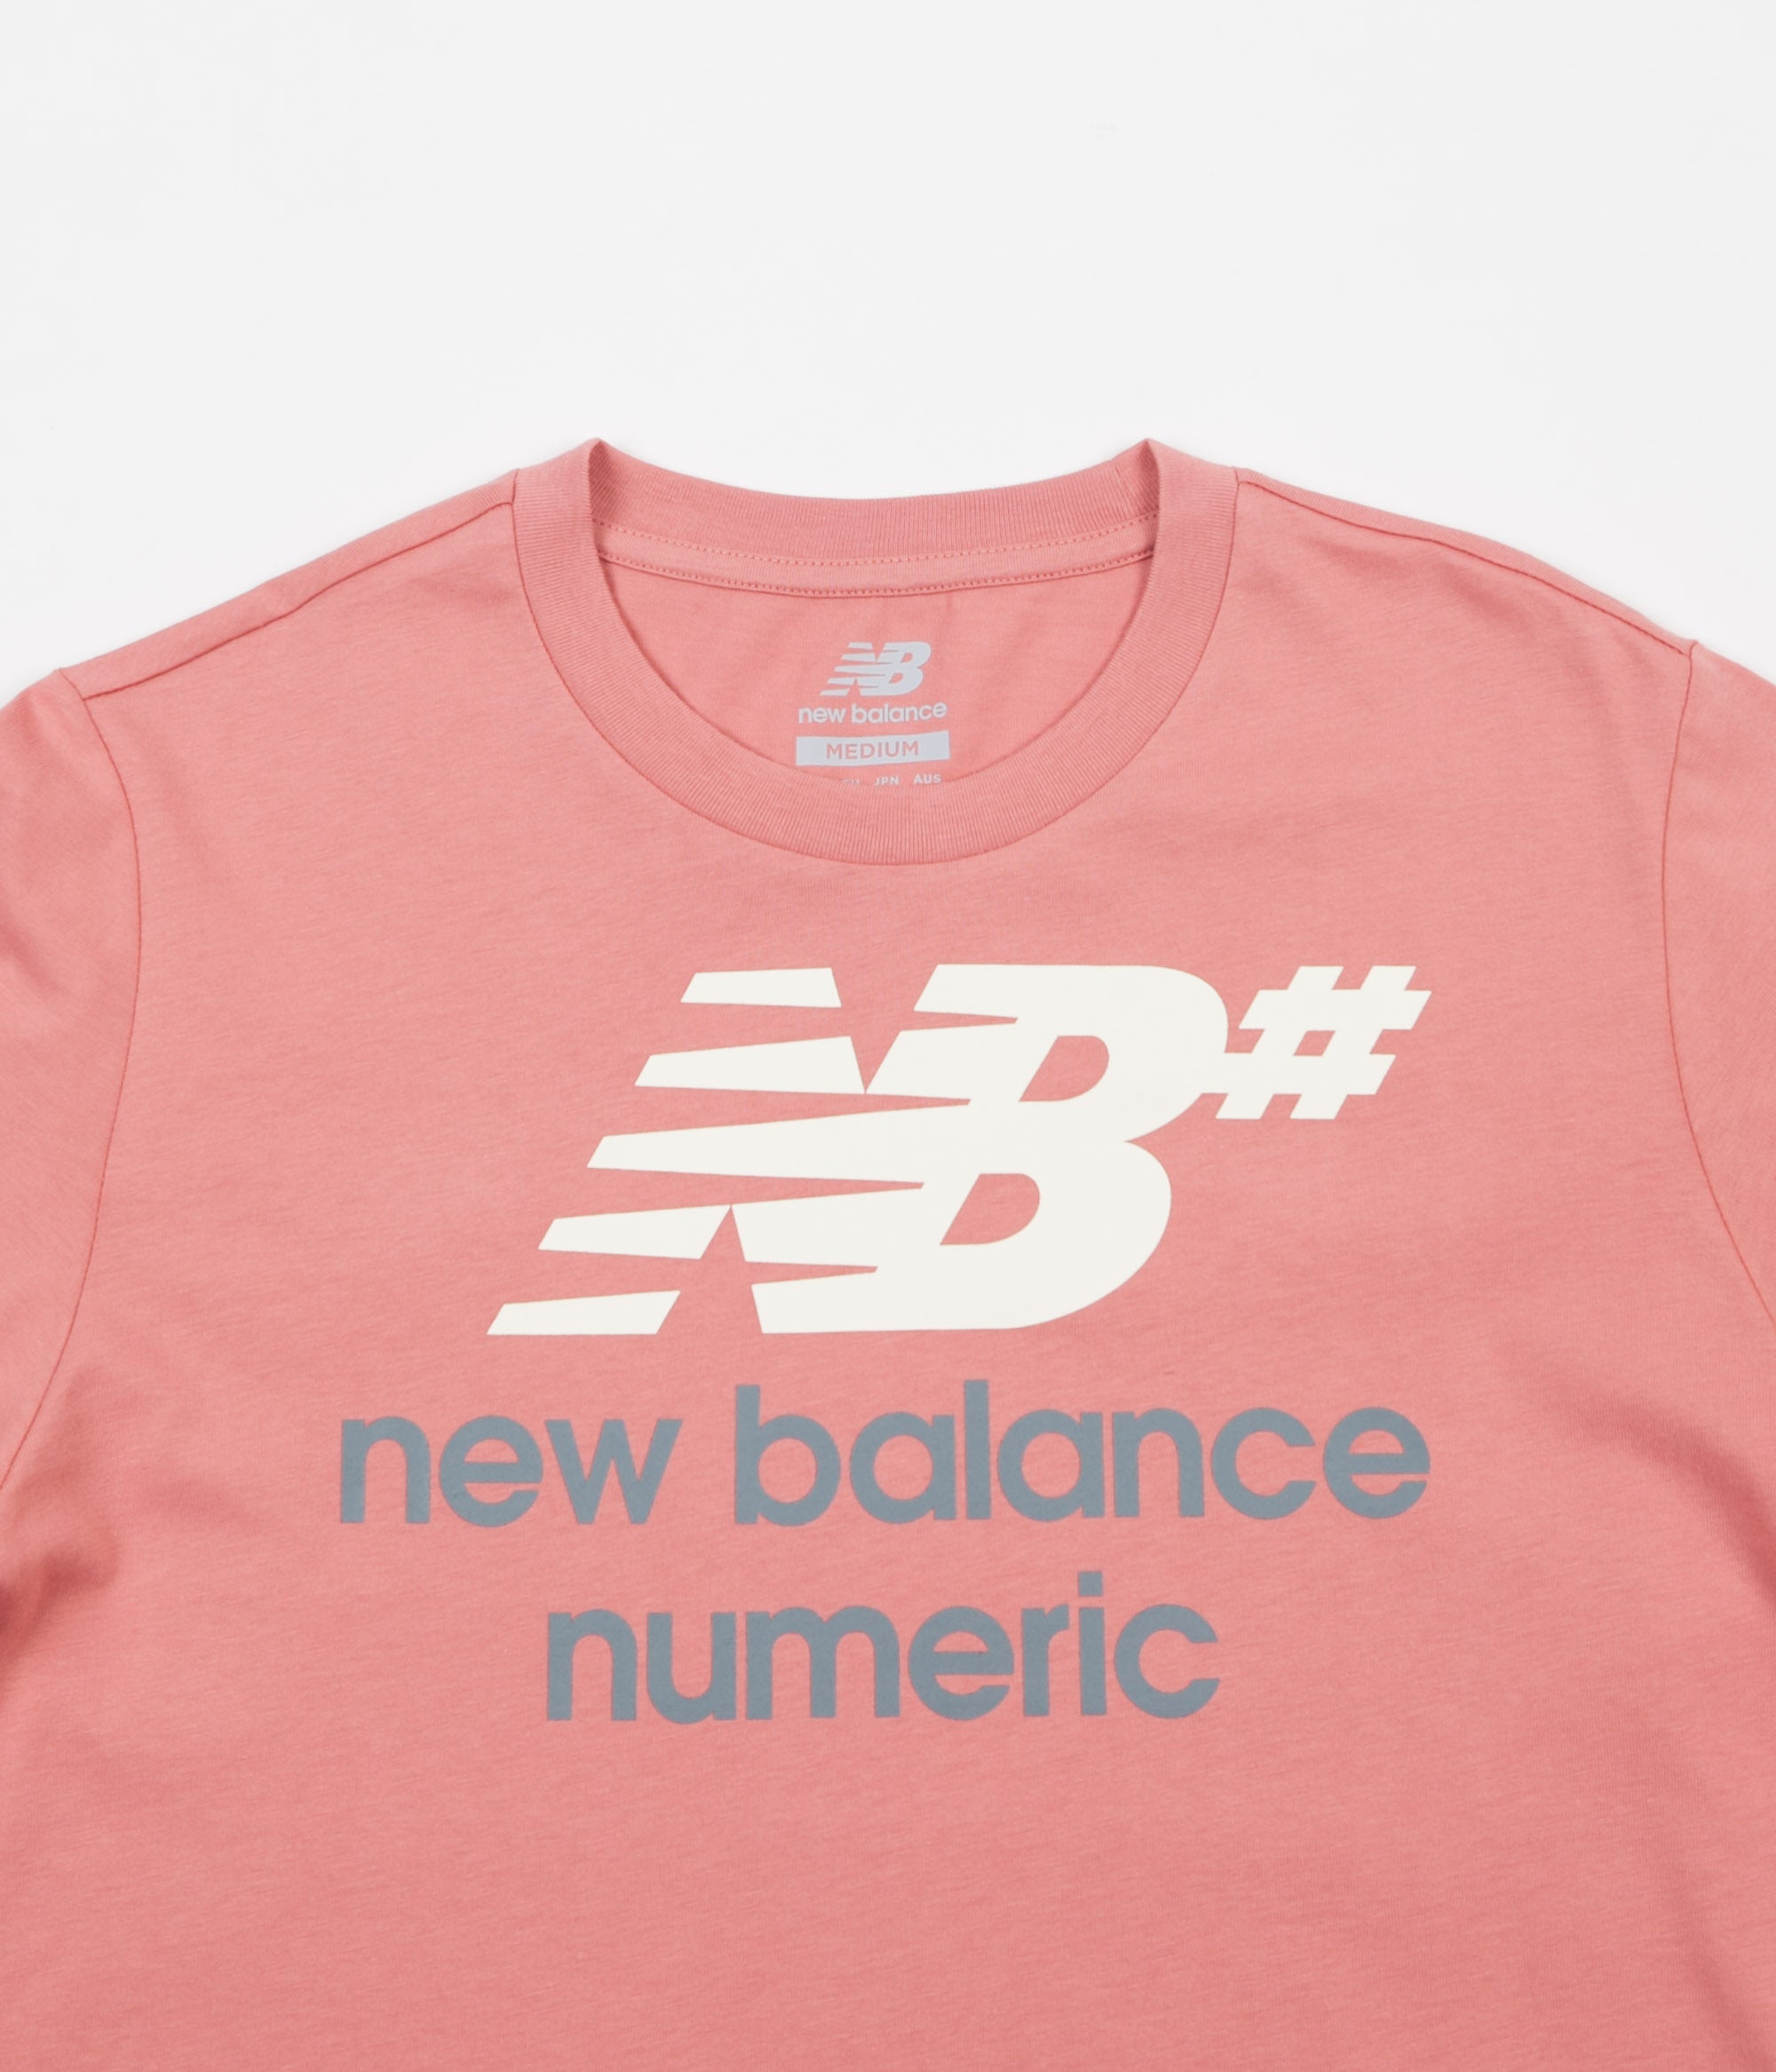 new balance numeric shirt